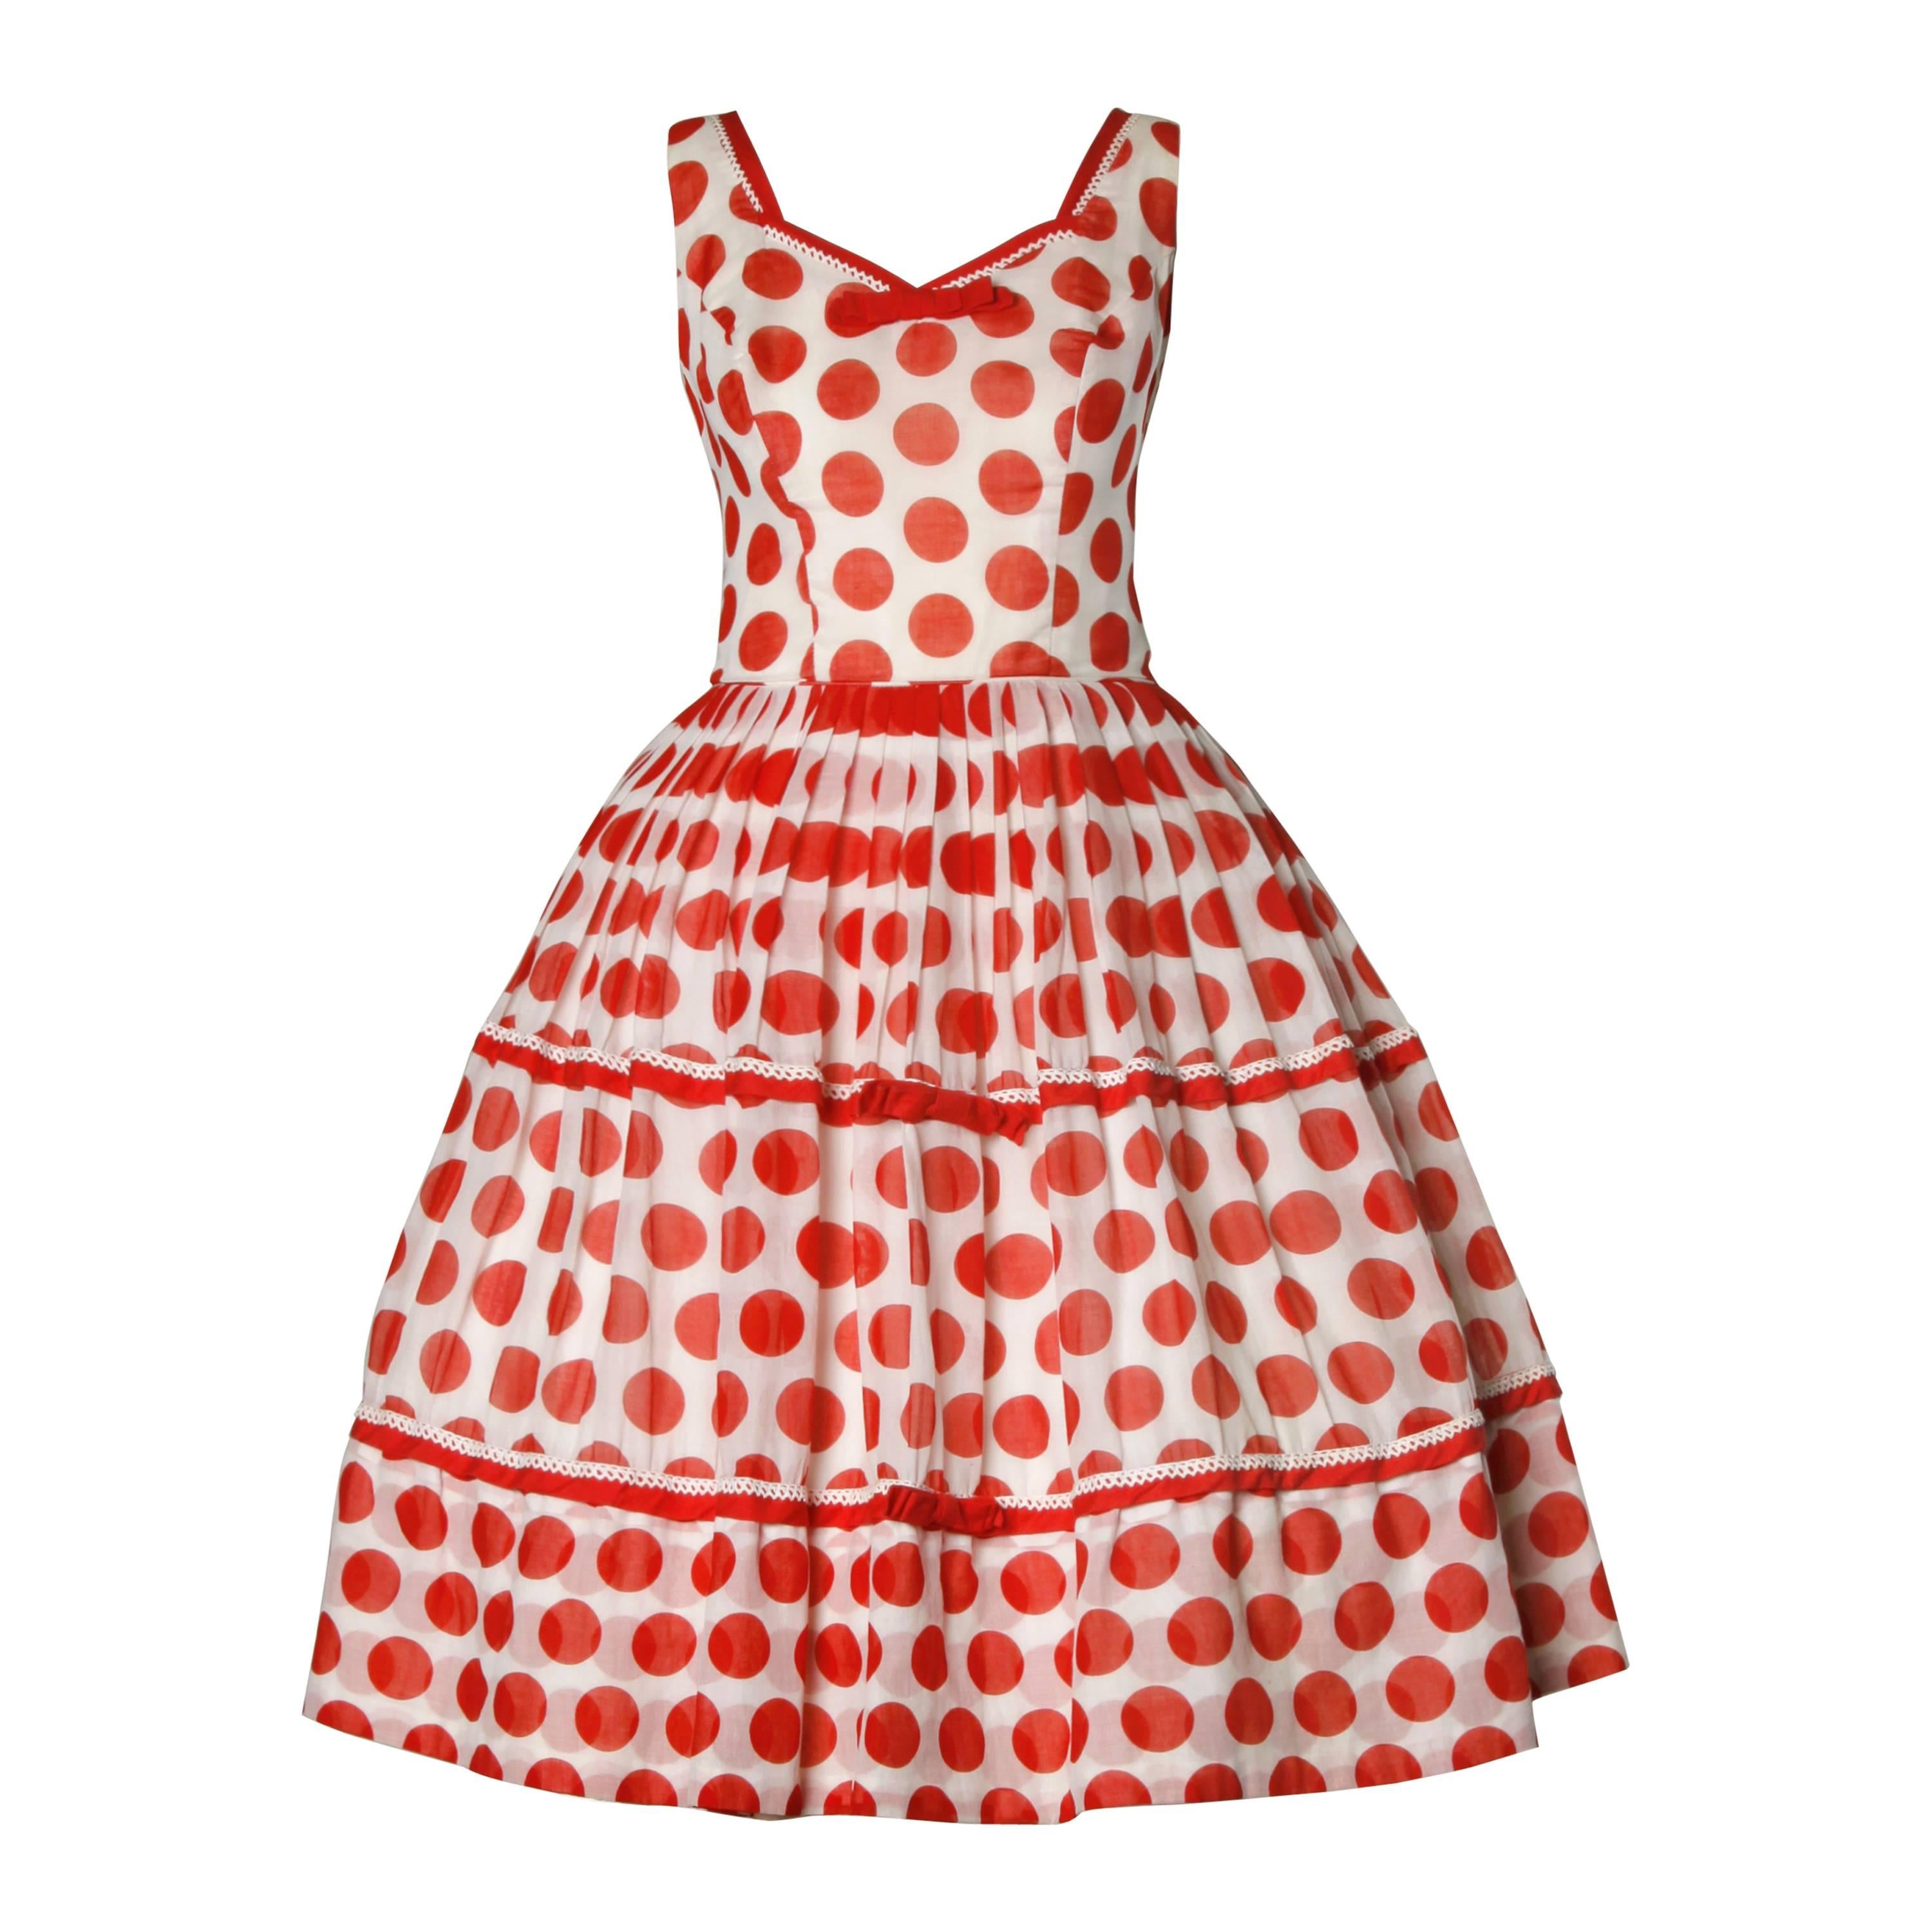 1950s Vintage Red + White Polka Dot Print Party Dress